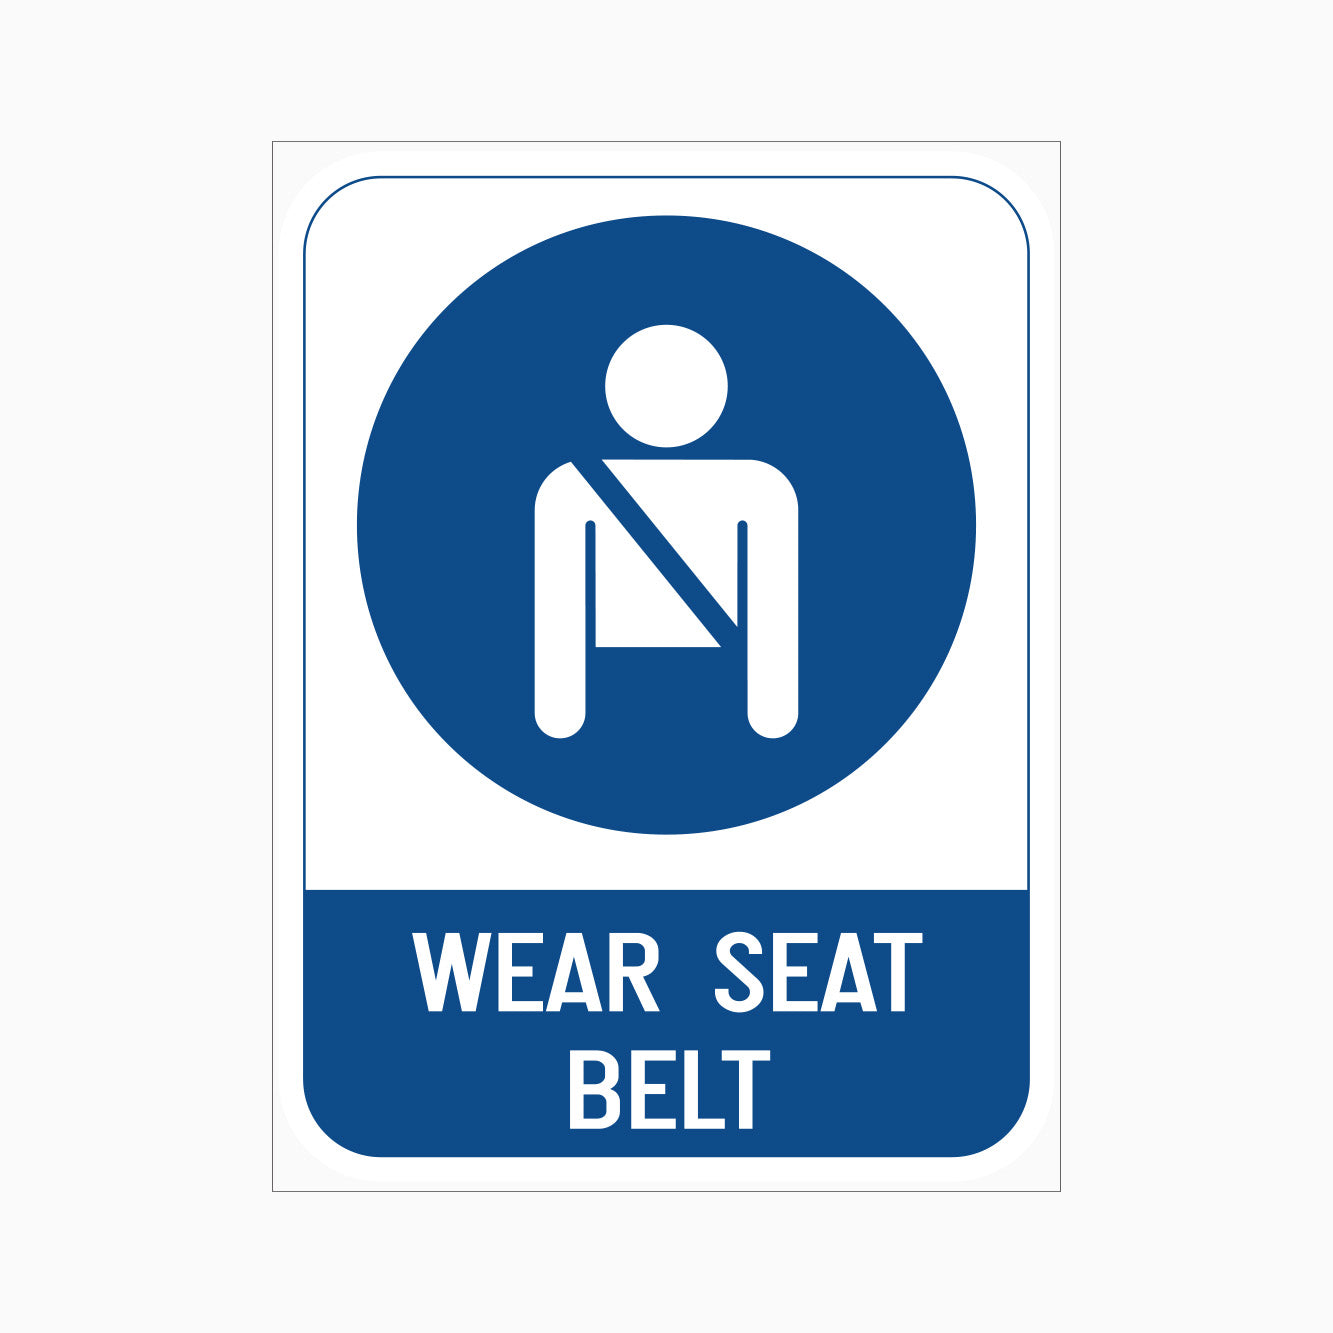 WEAR SEAT BELT SIGN - GET SIGNS